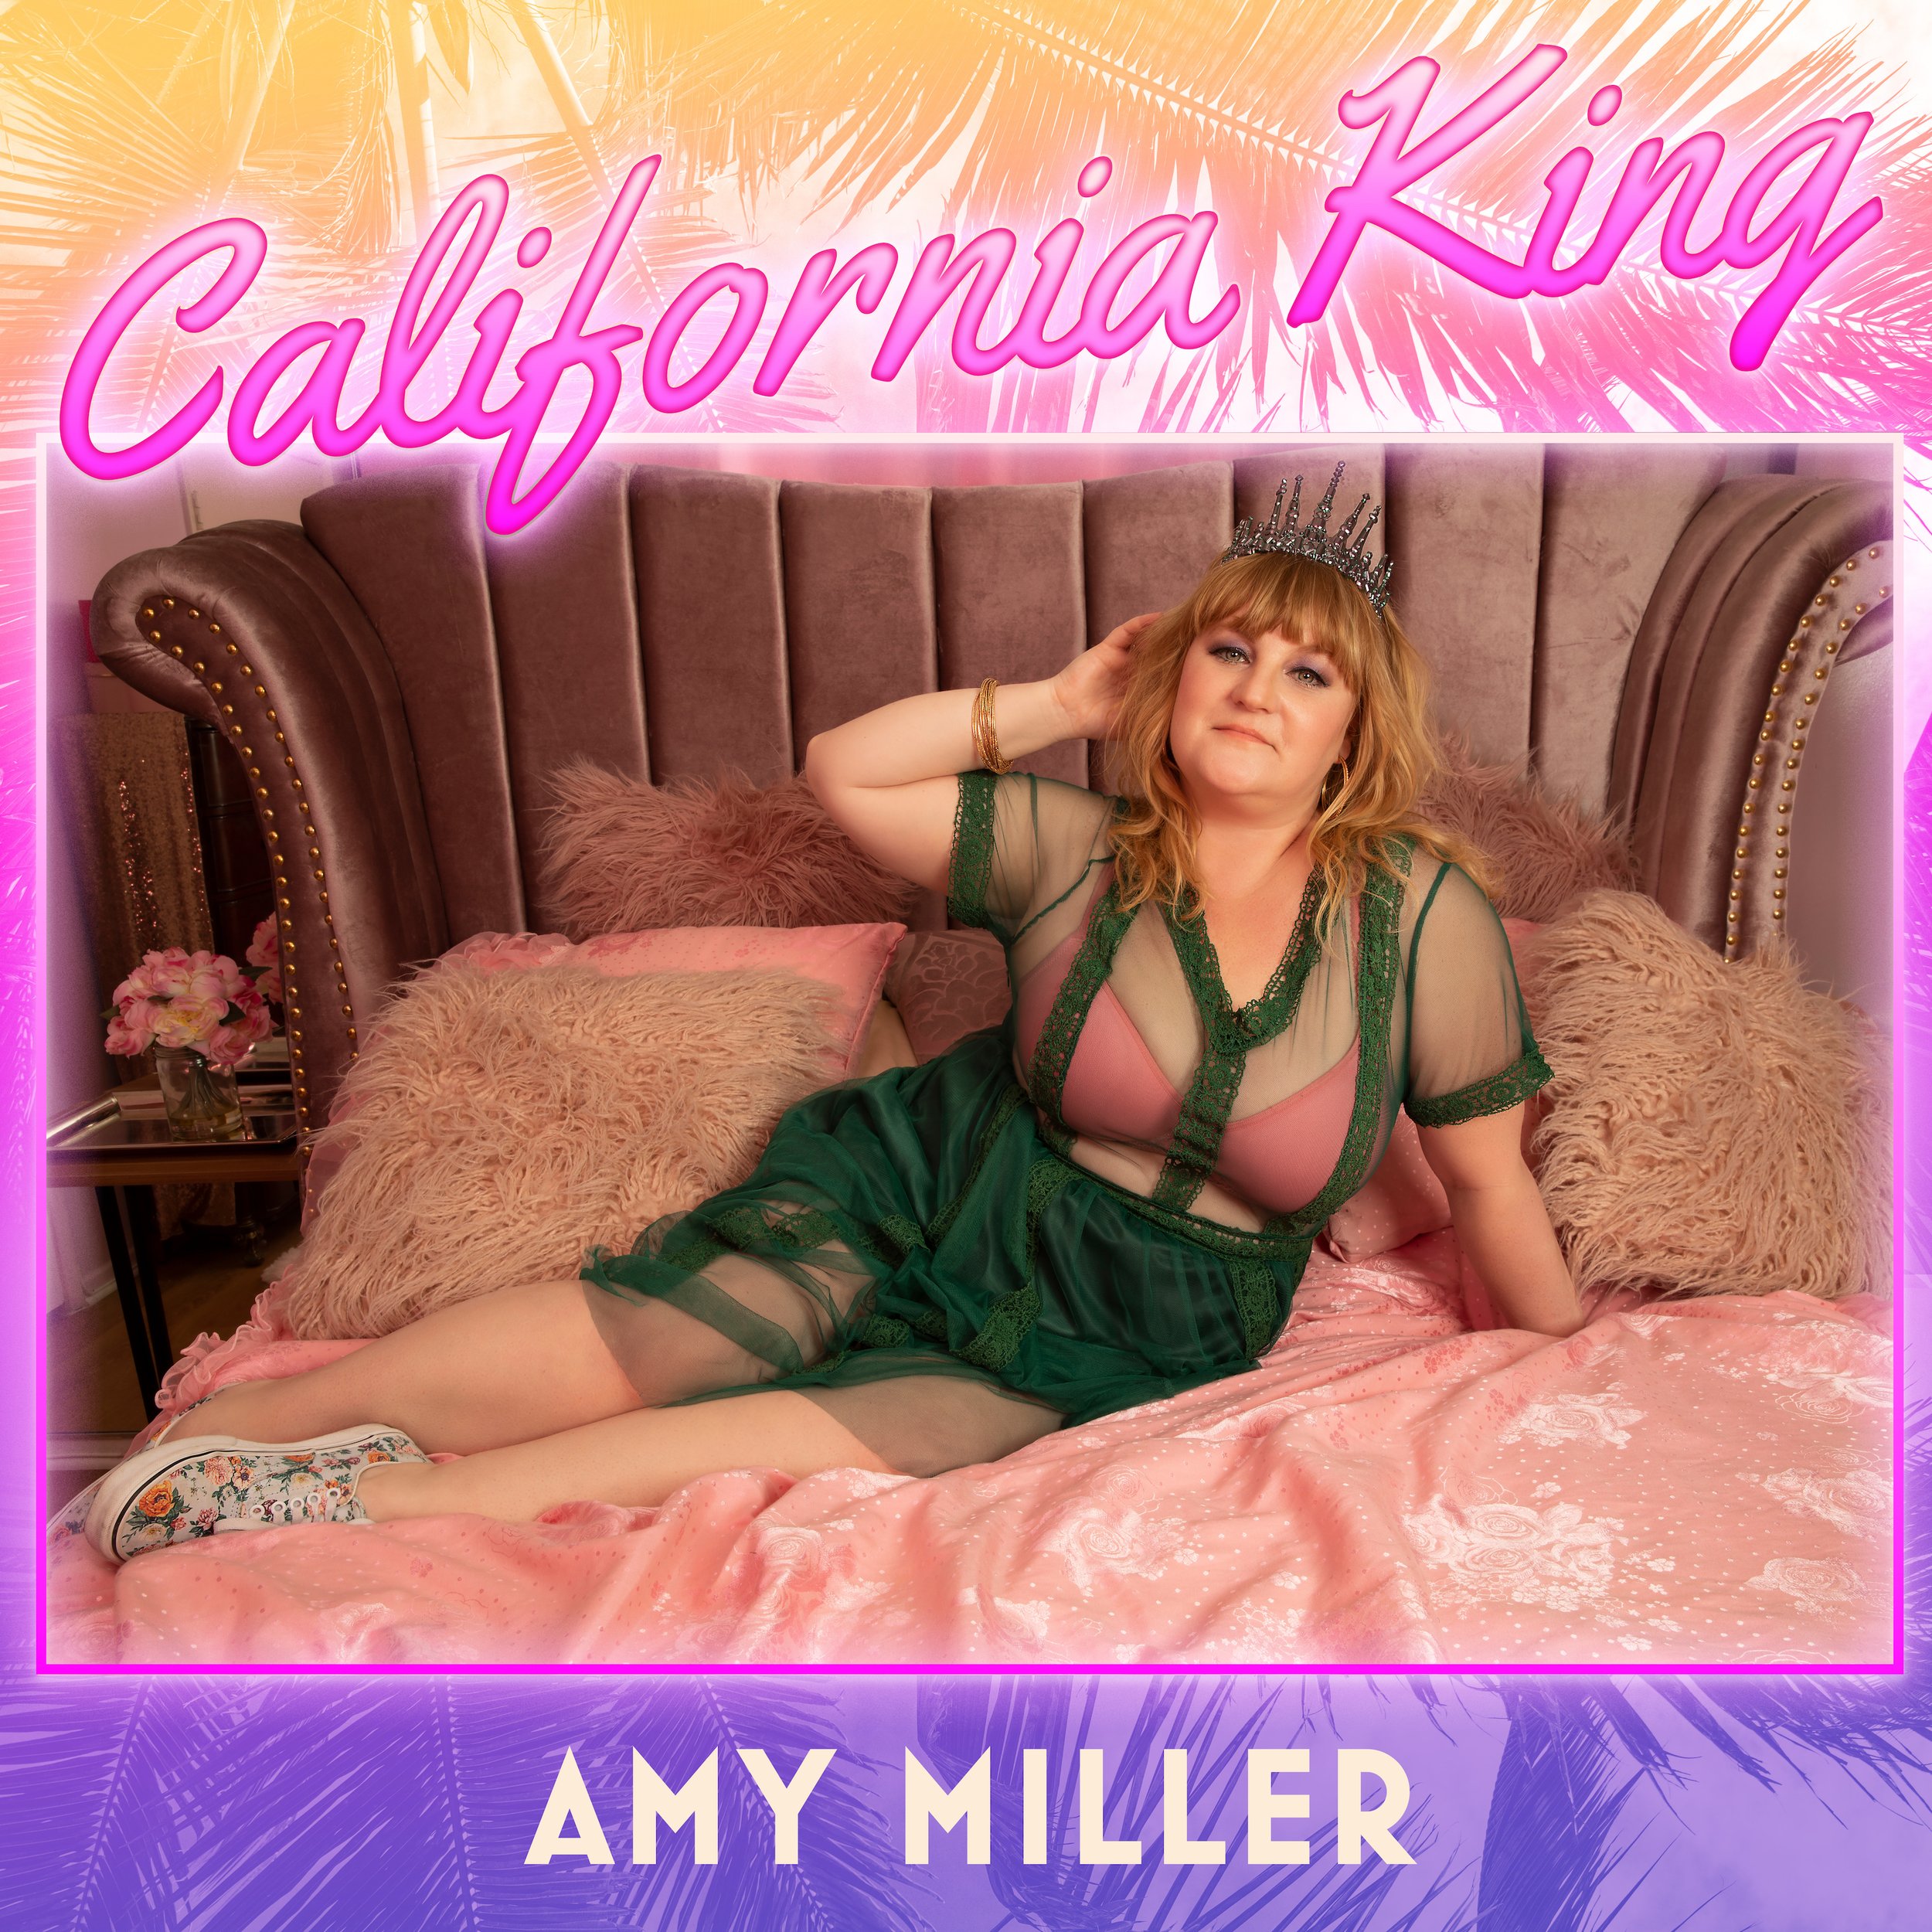 Amy Miler - California King 3000x3000 72dpi.jpeg